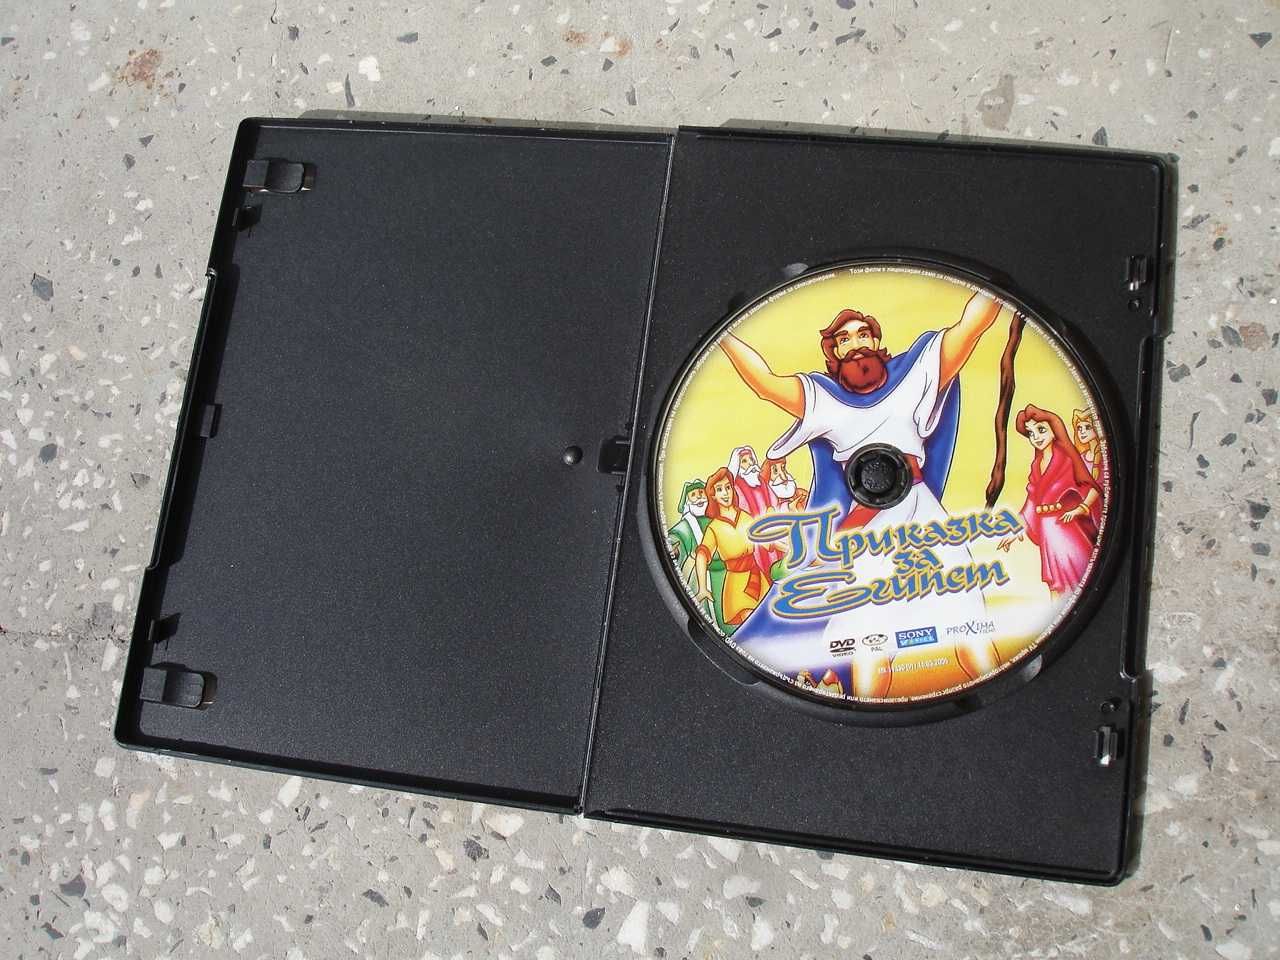 Детски филми анимация DVD, Game PC CD-ROM